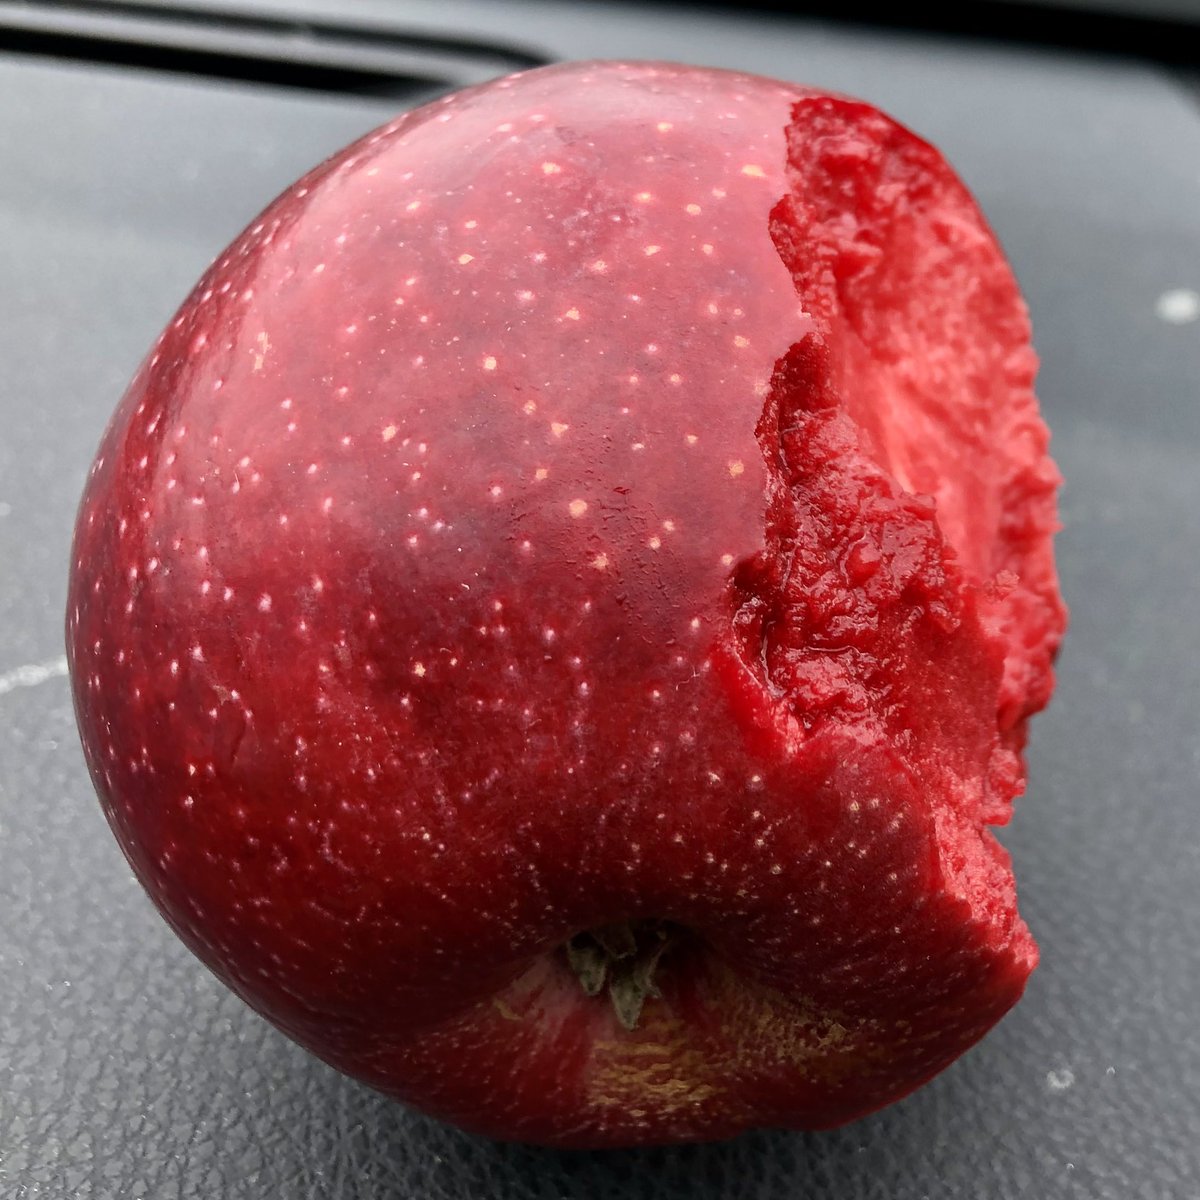 A tasty red-fleshed #Apples that has high levels of expression of MYB10 gene #PlantBreeding #PlantGenetics